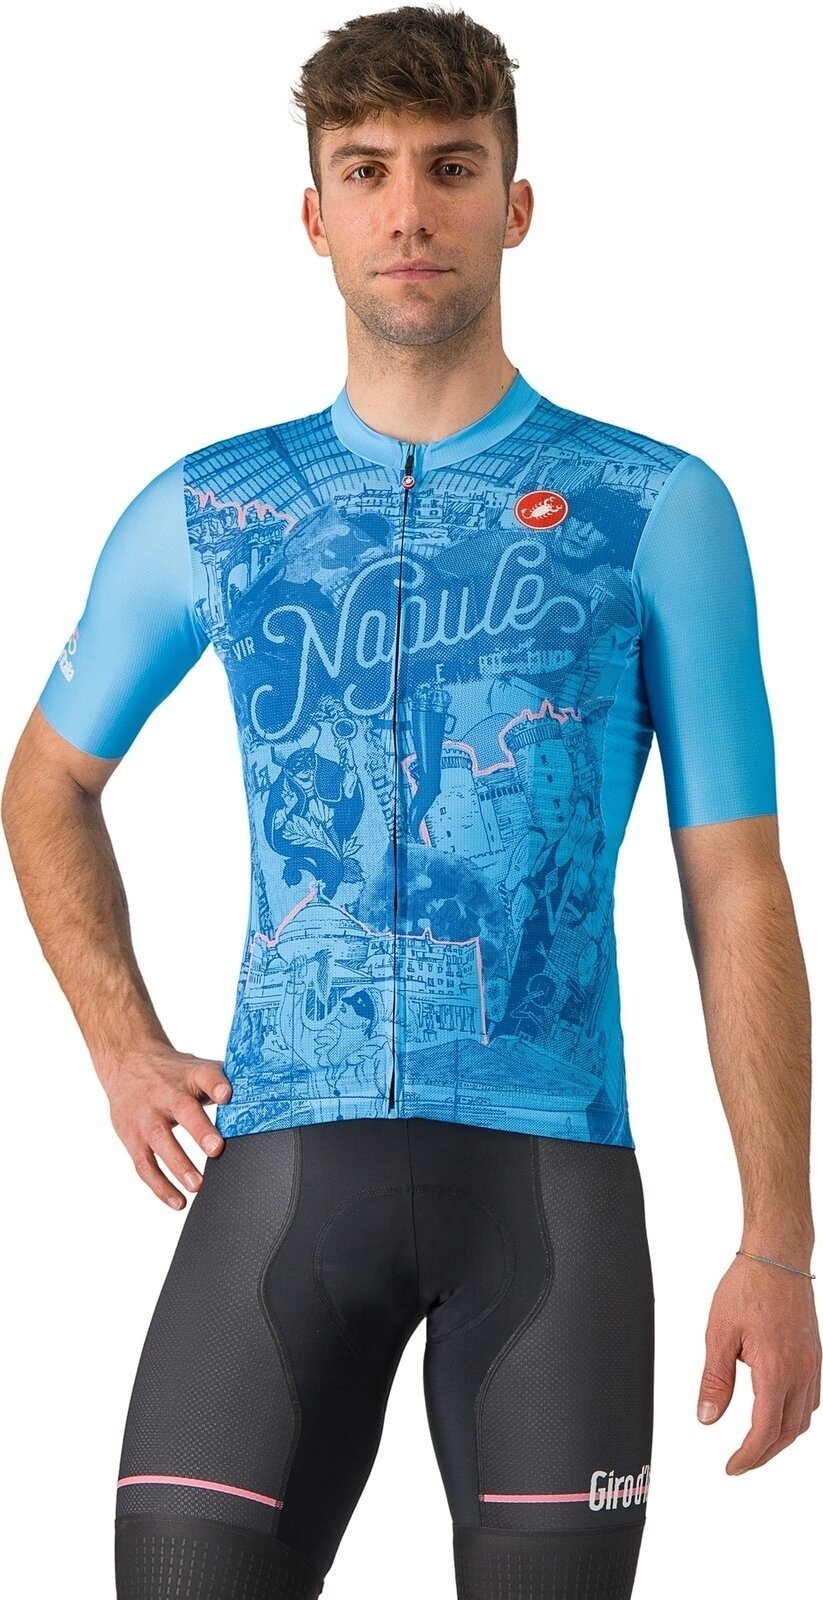 Cycling jersey Castelli Giro107 Napoli Azzurro Napoli XL